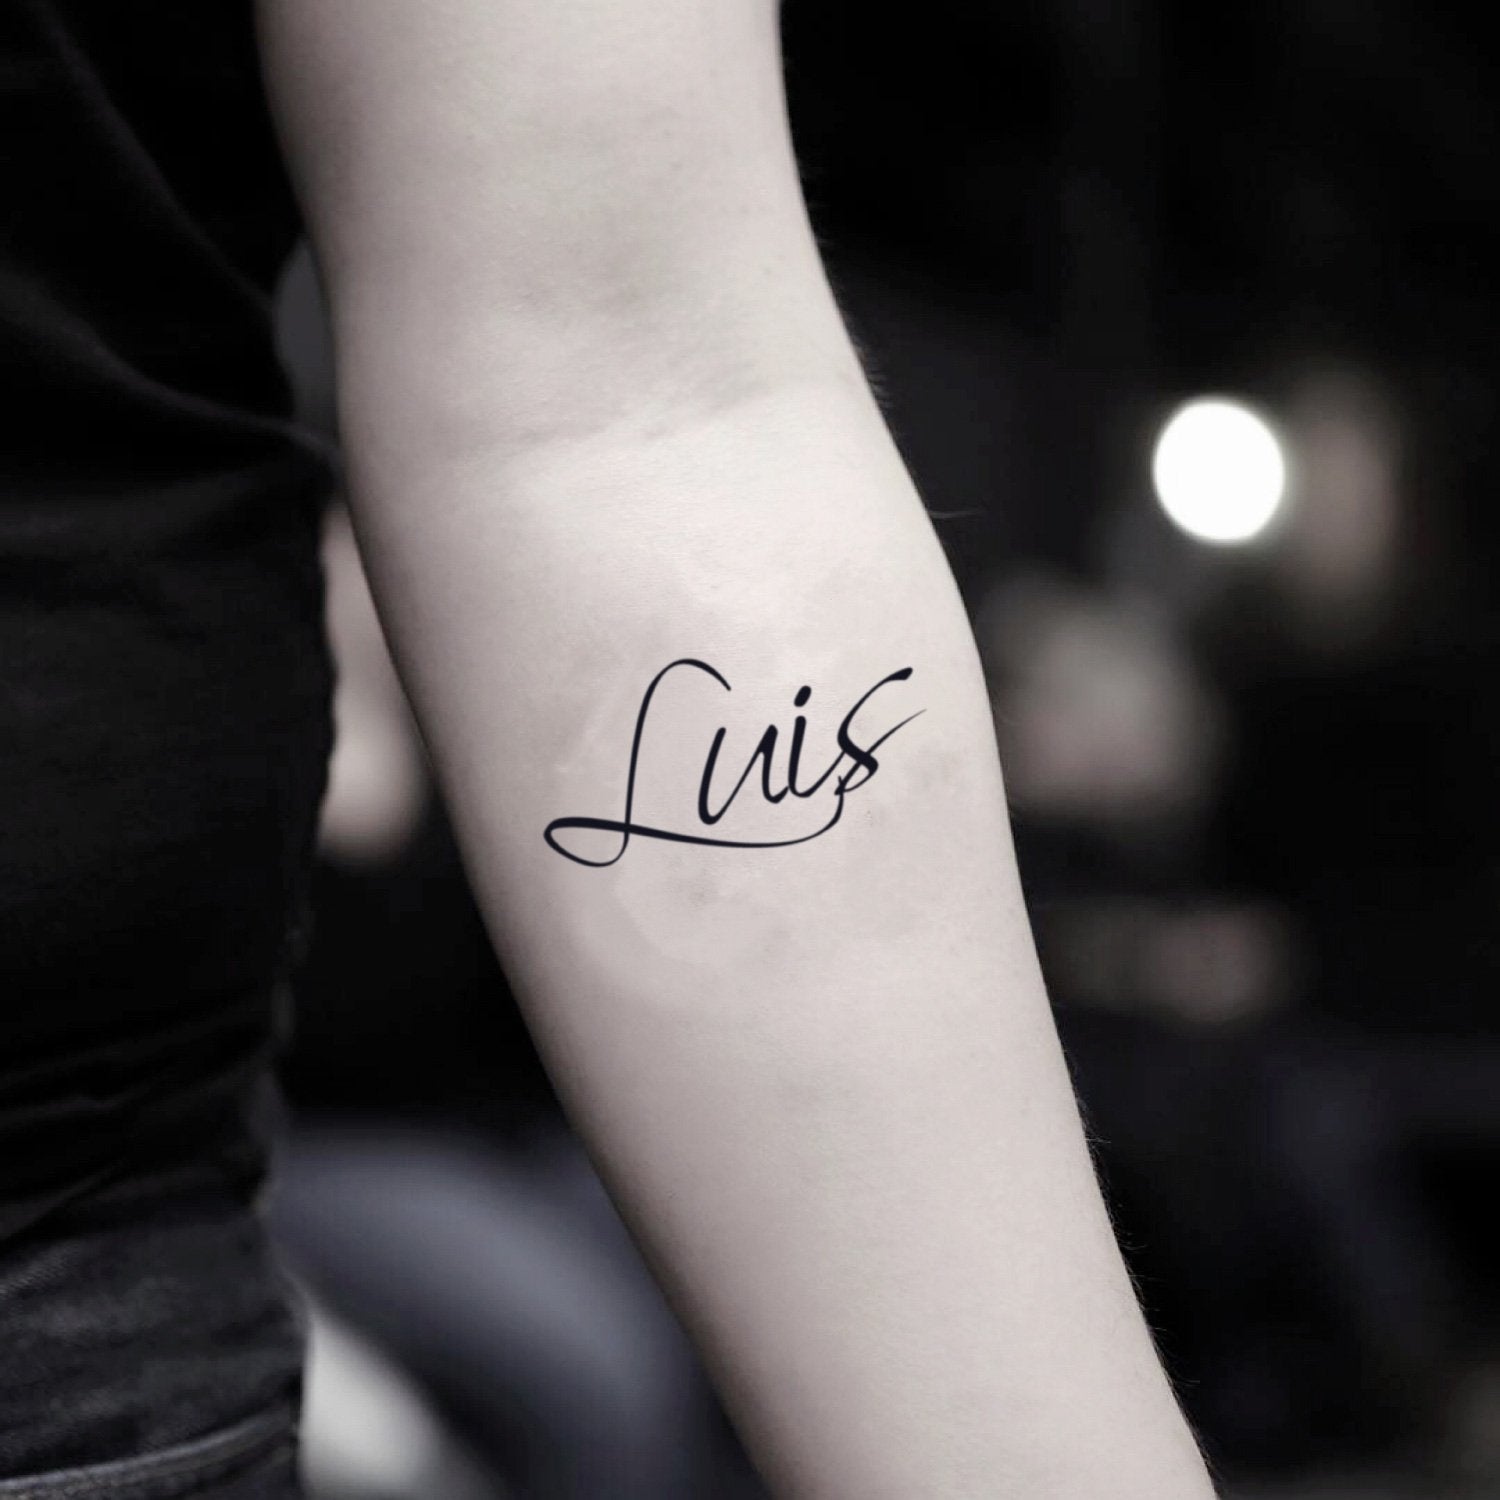 fake small luis lettering temporary tattoo sticker design idea on inner arm